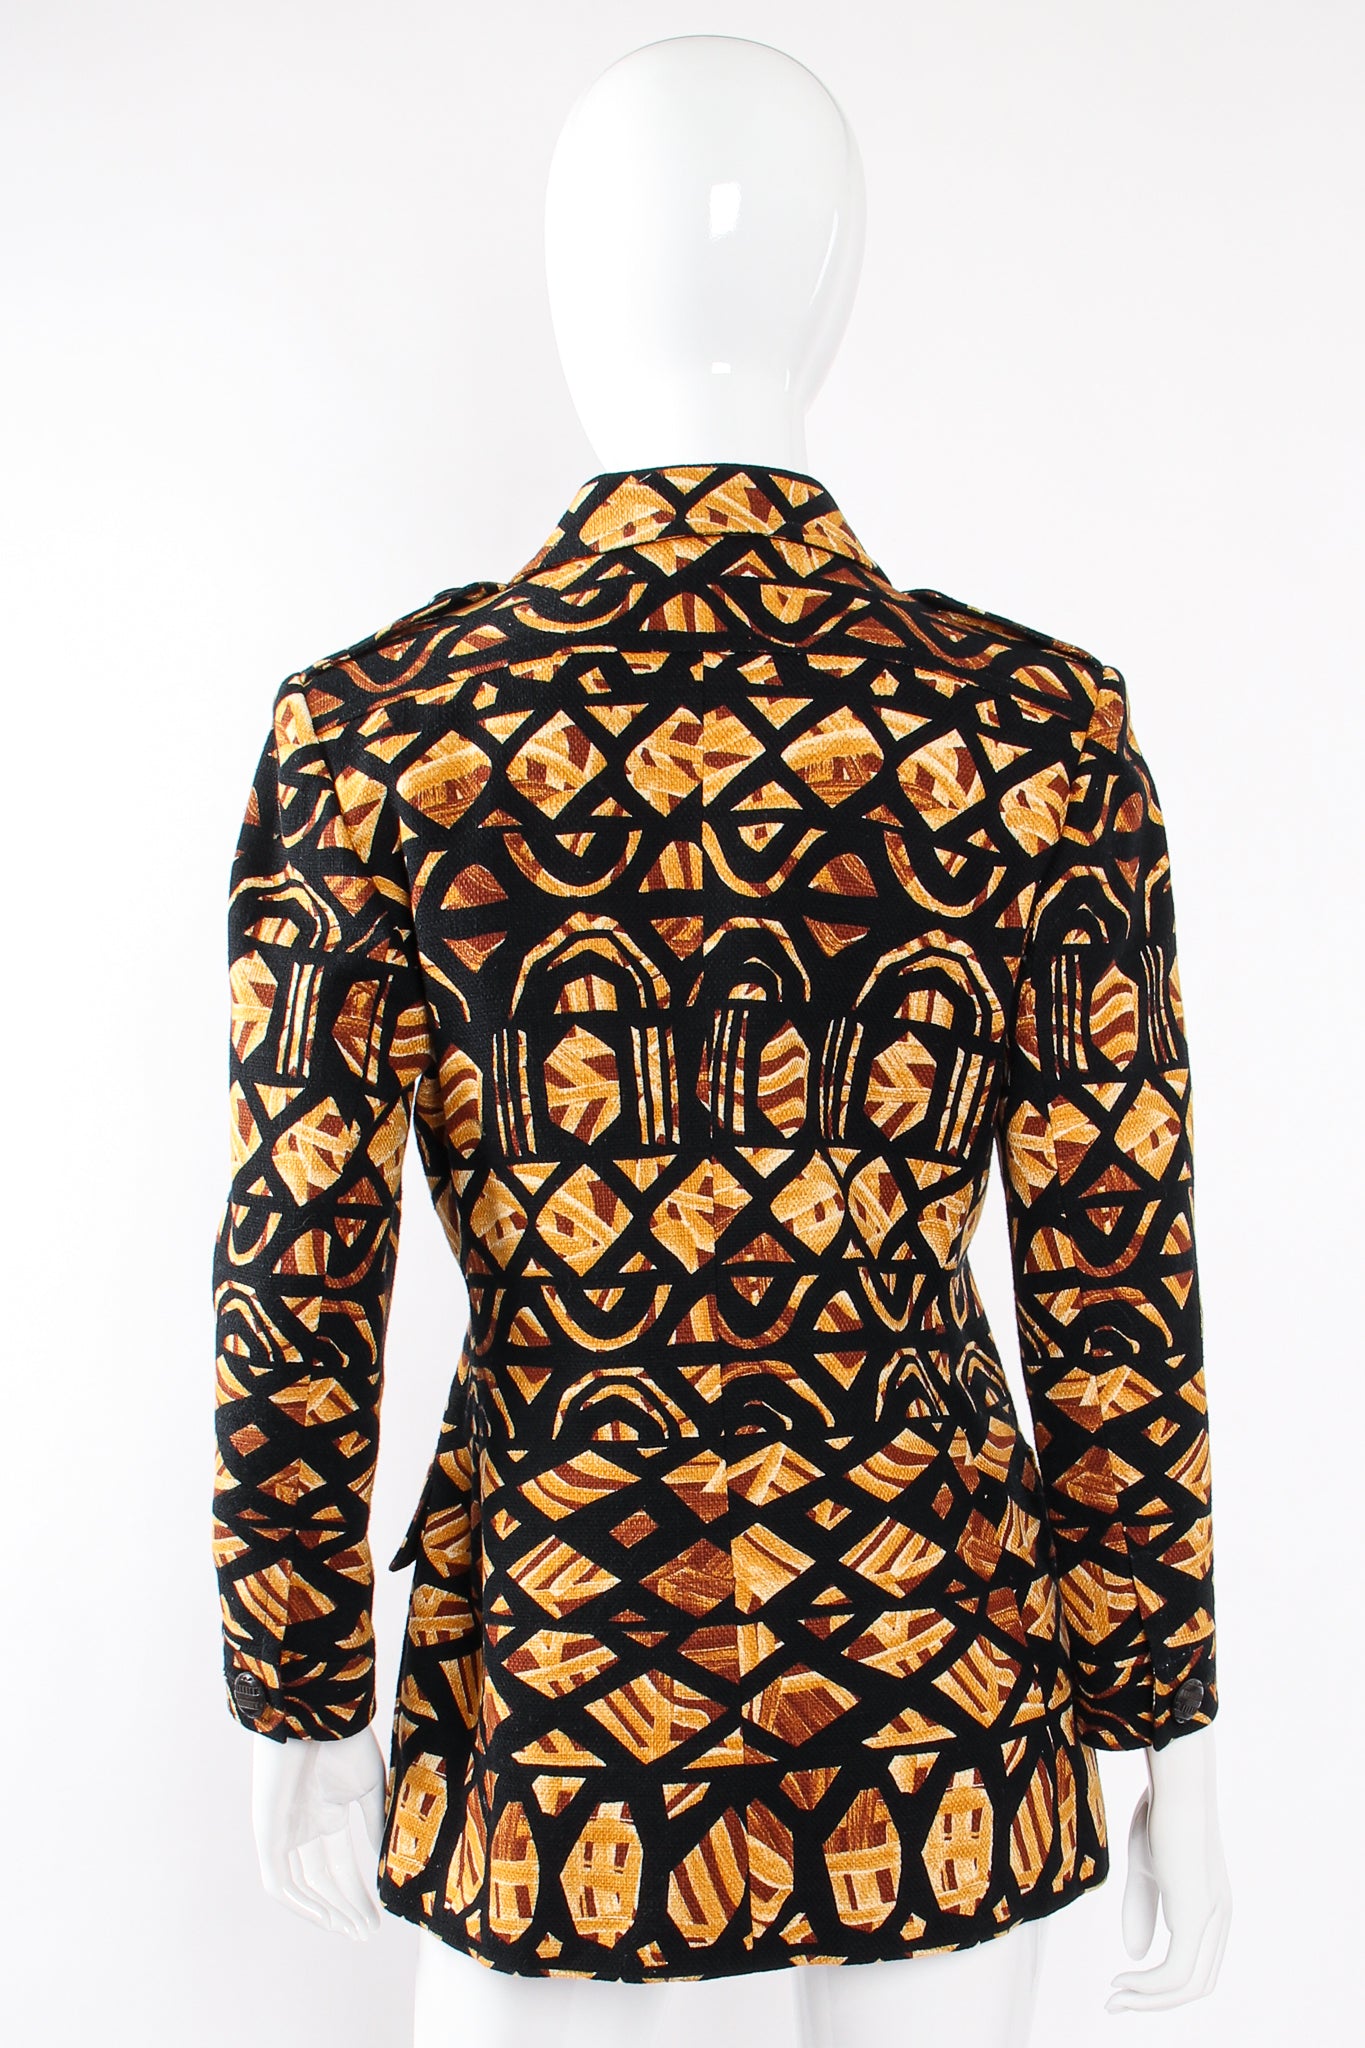 Vintage YSL Yves Saint Laurent Wax Print Safari Jacket on Mannequin back at Recess LA